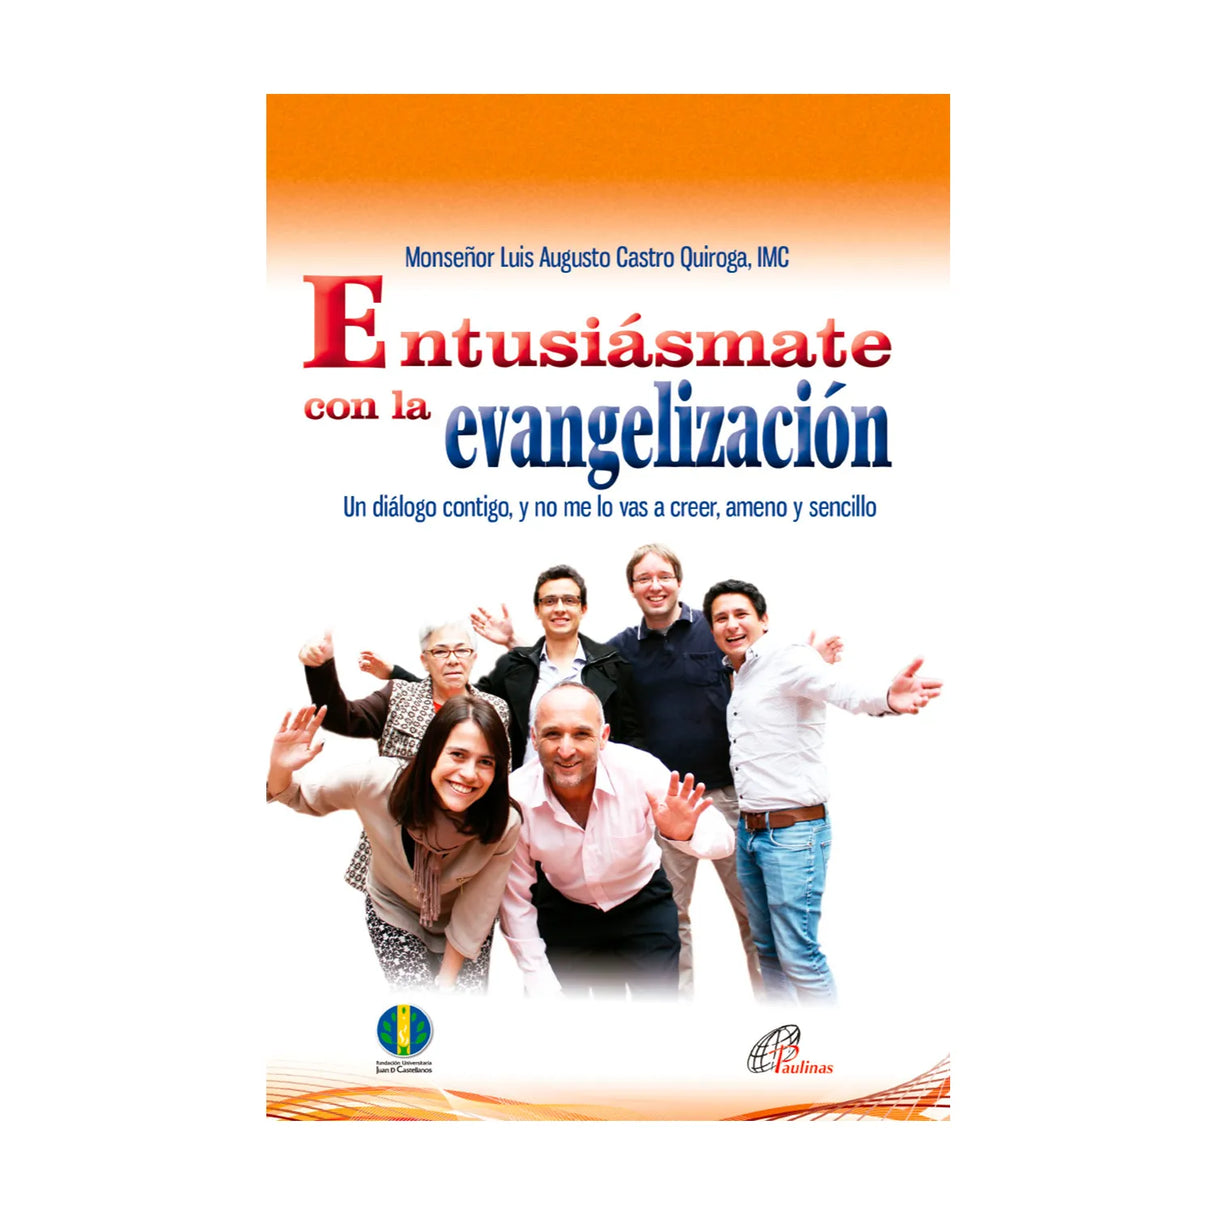 Get excited about evangelization 